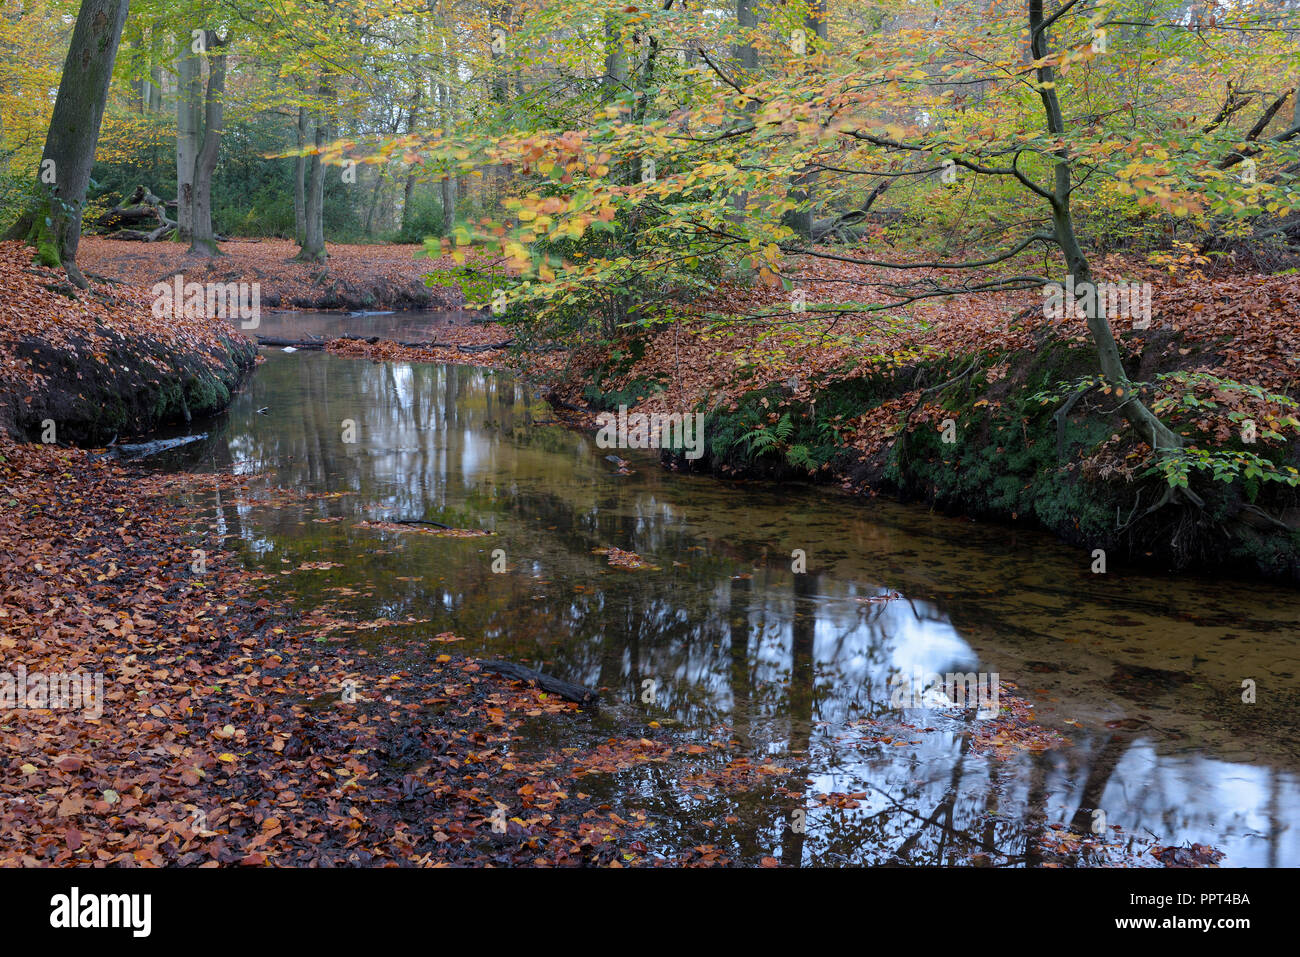 Rotbach, creek in beech forest, november, Oberhausen, Germany Stock Photo